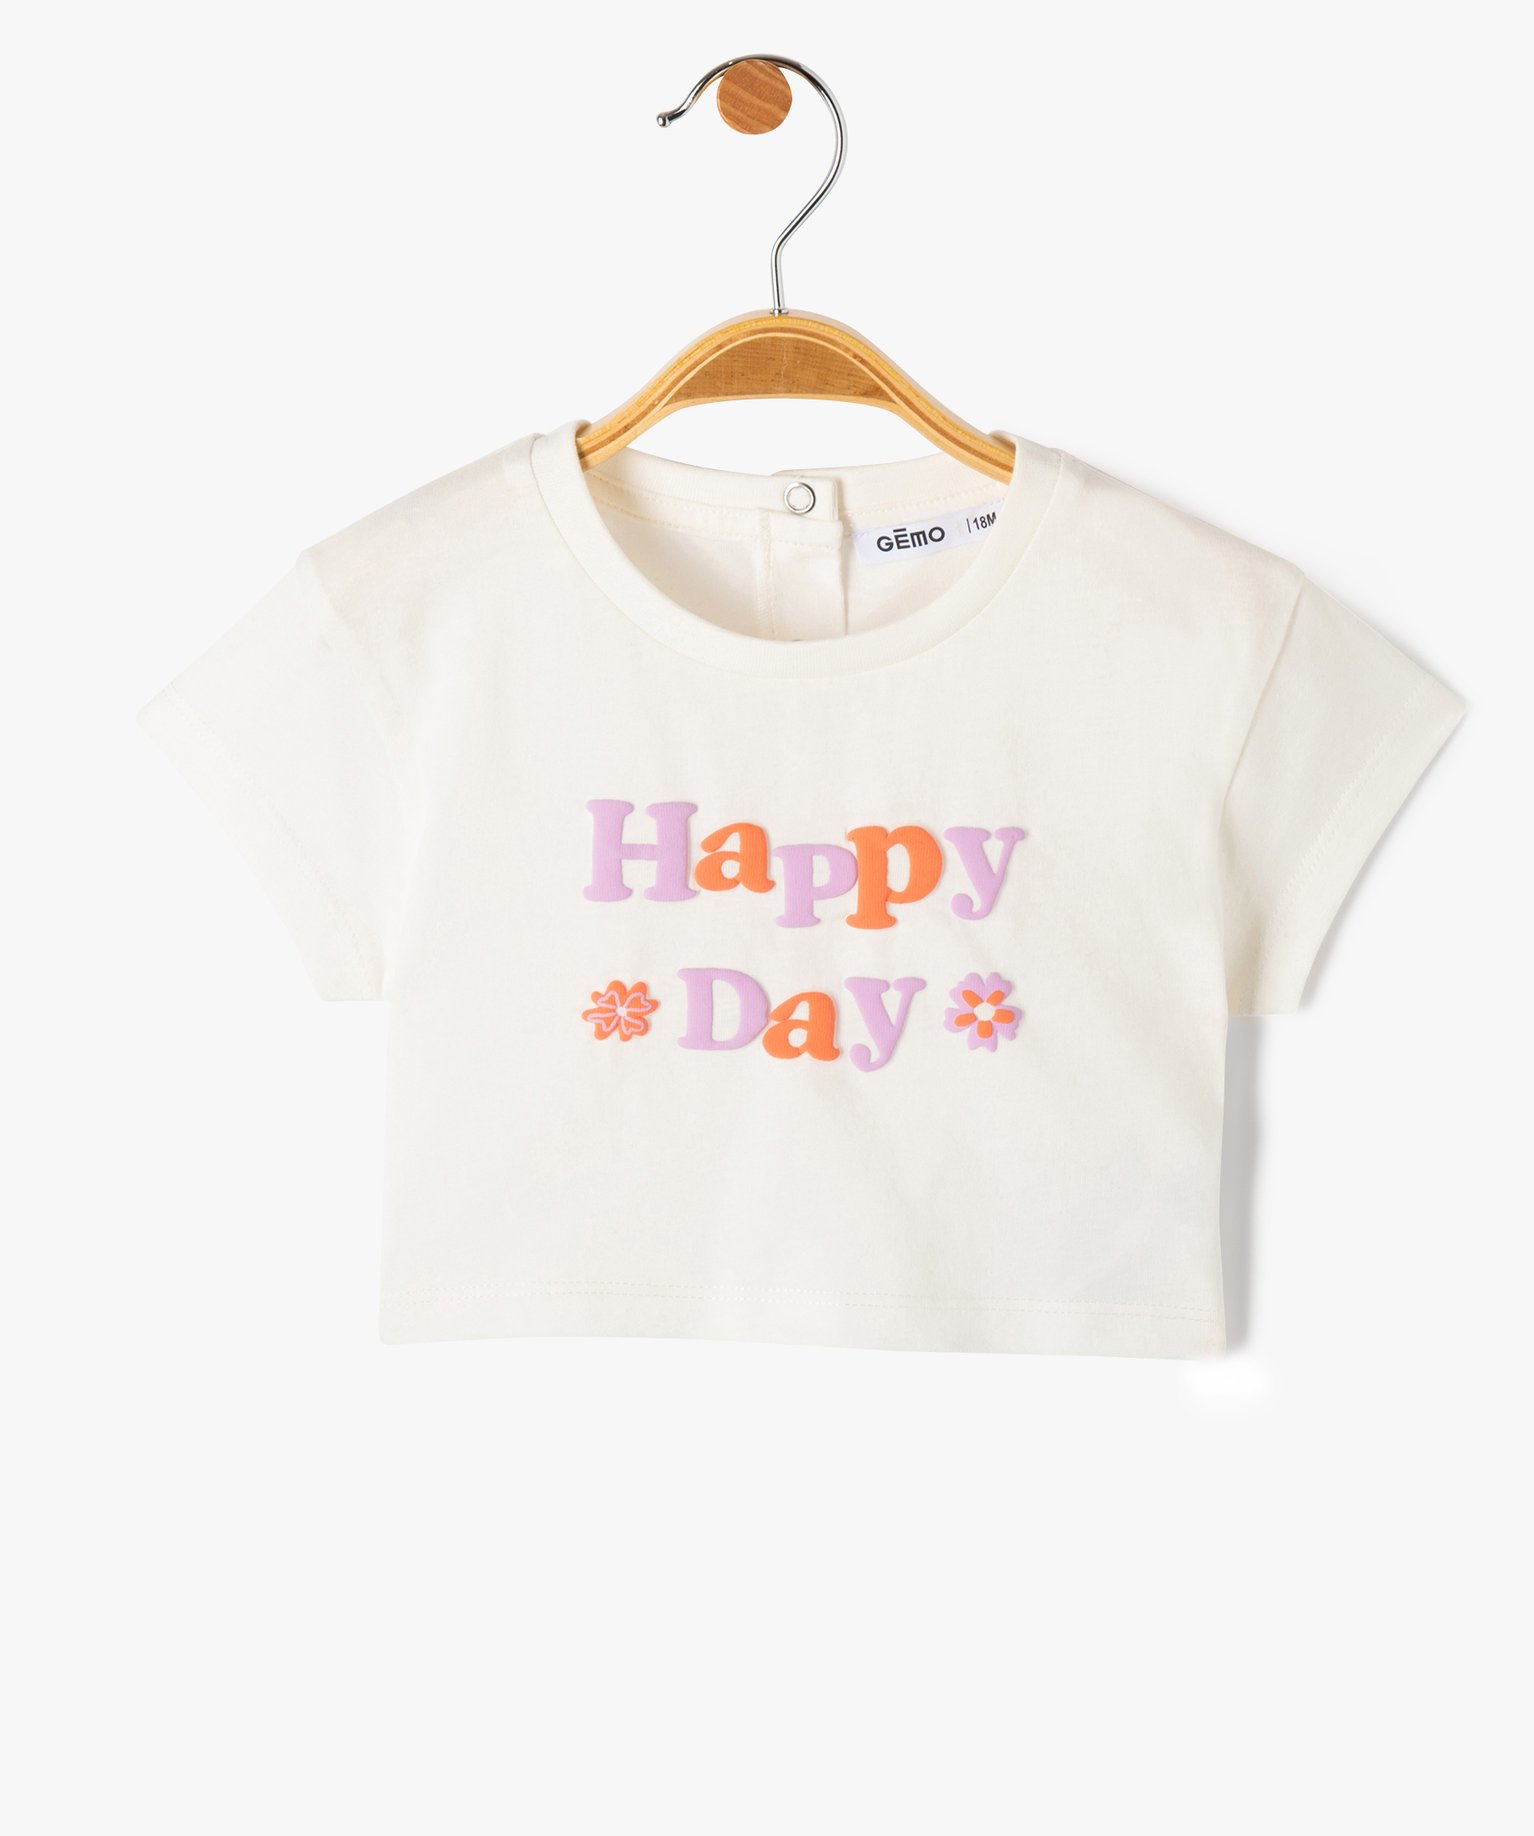 Tee-shirt bébé fille crop top à message en relief - GEMO